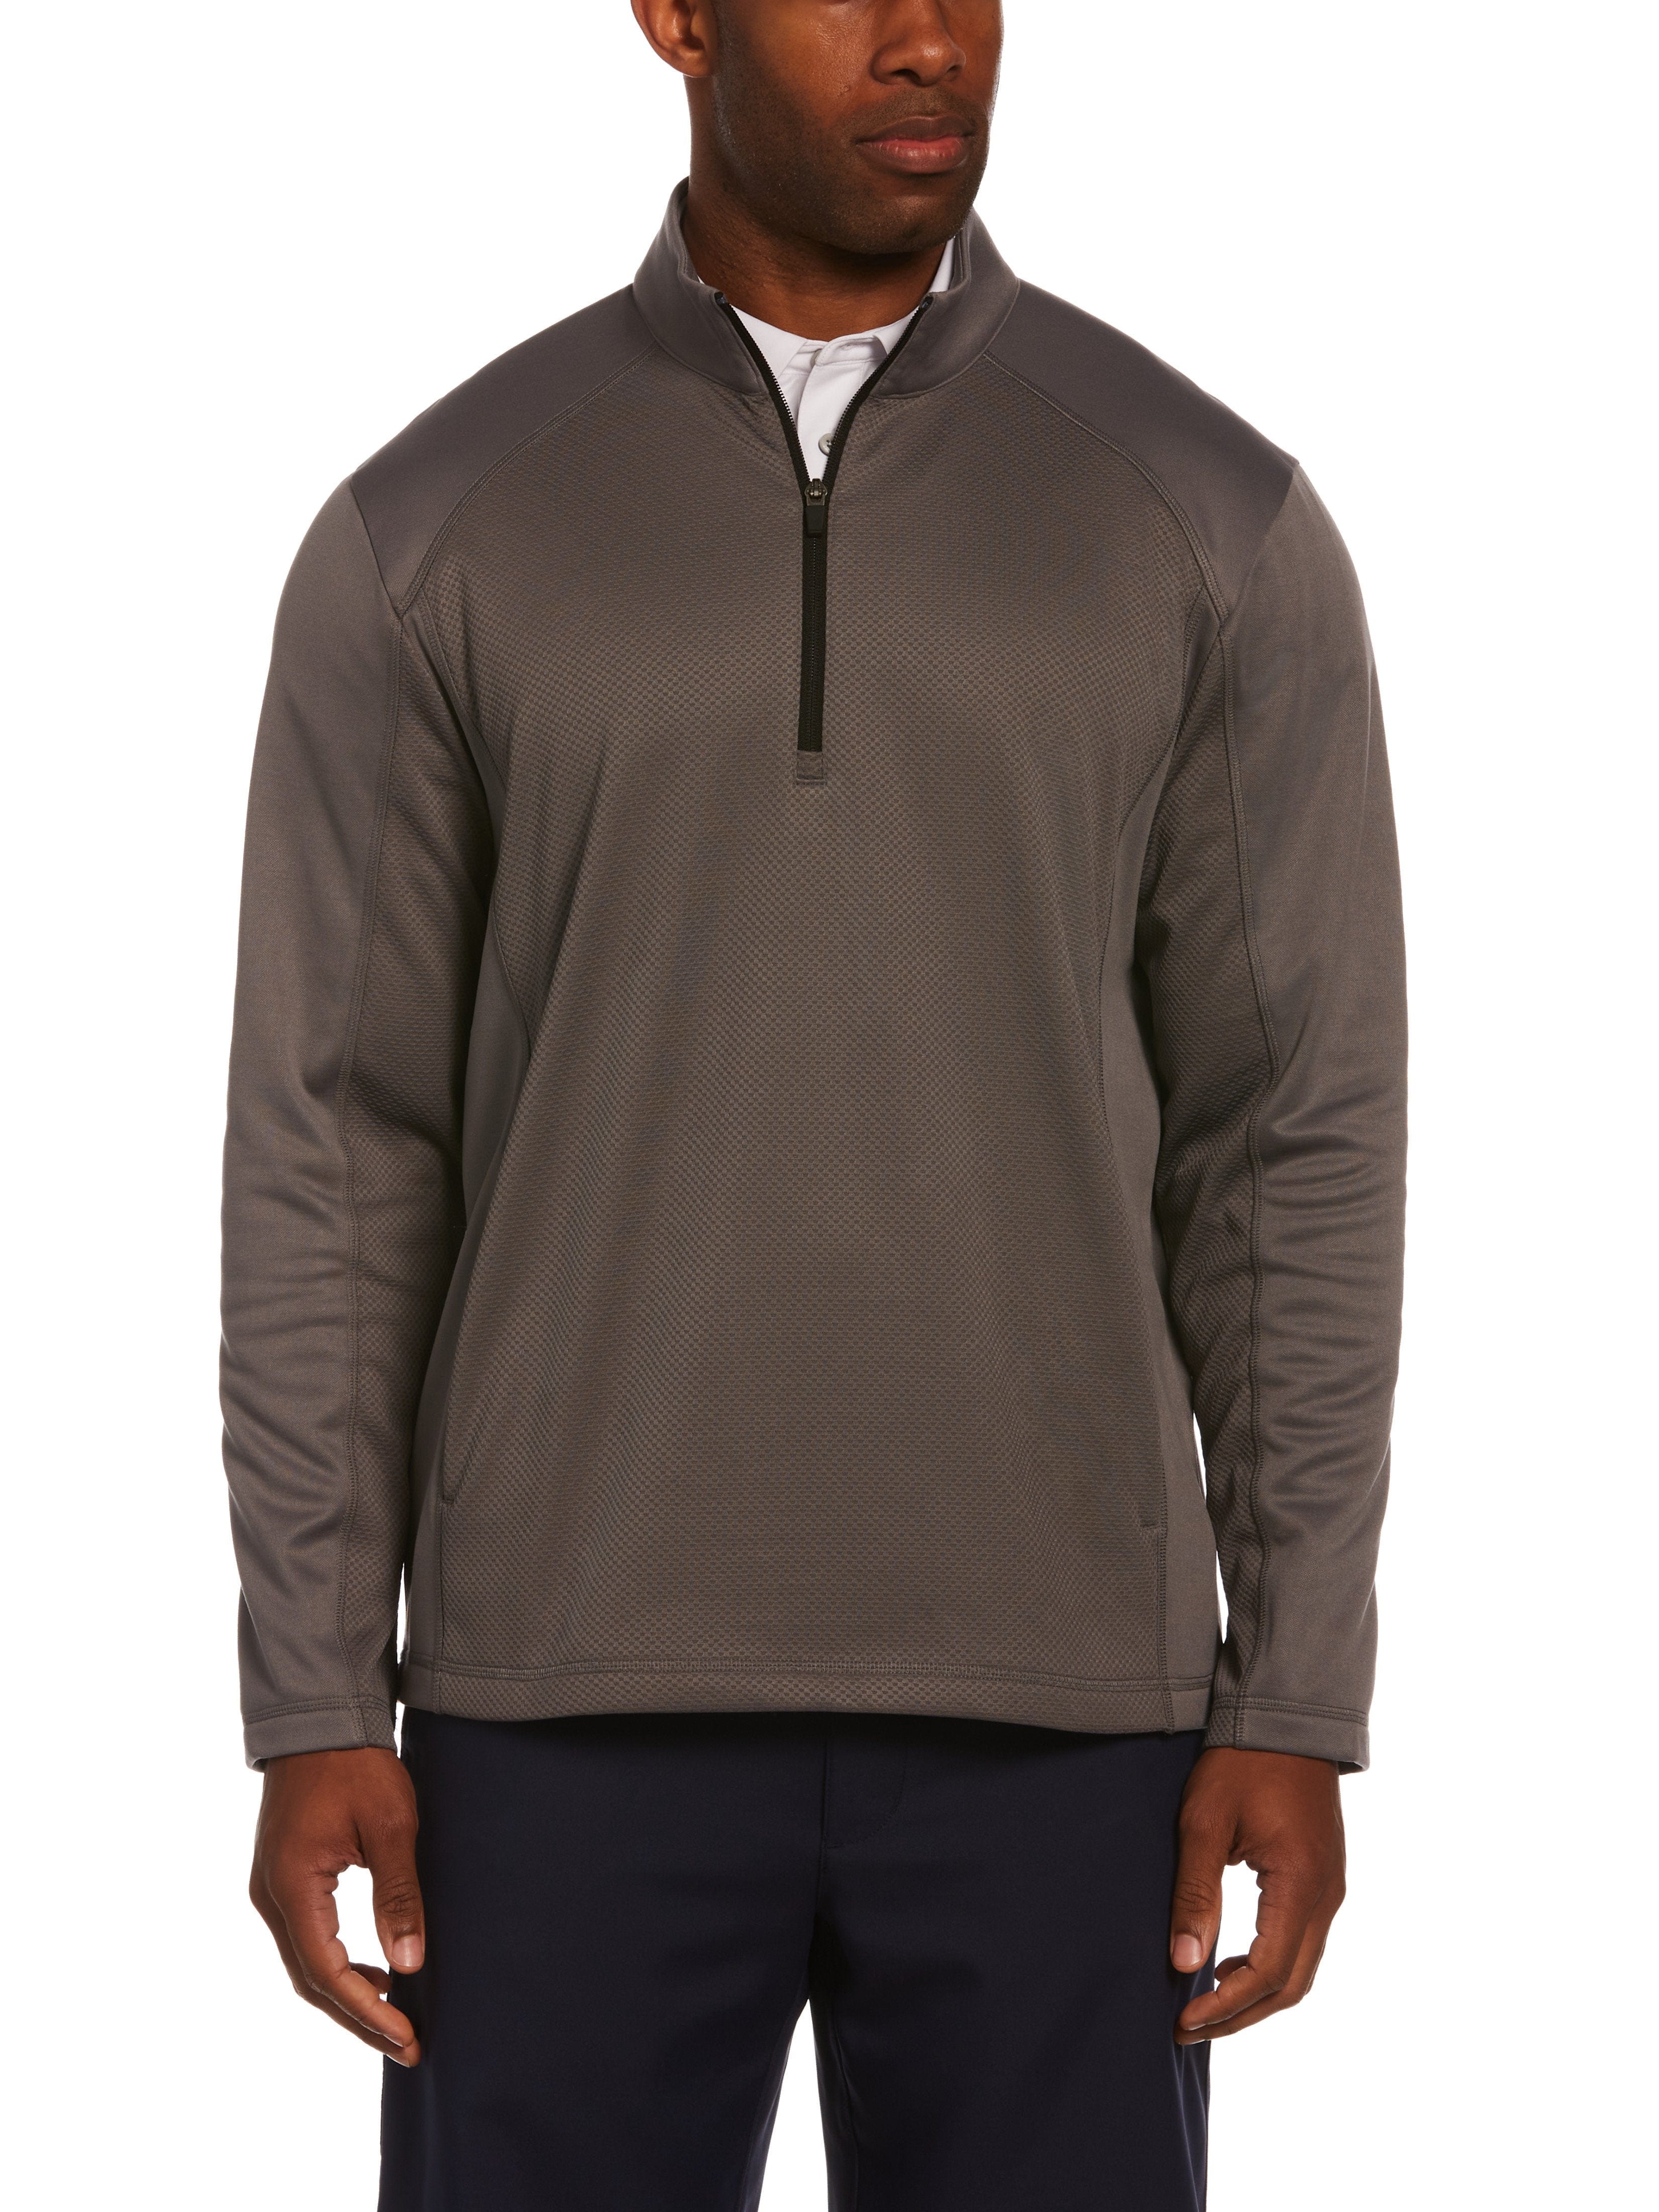 PGA TOUR Apparel Mens Mixed Texture Fleece 1/4 Zip Golf Jacket Top, Size Medium, Quiet Shade Gray, 100% Polyester | Golf Apparel Shop